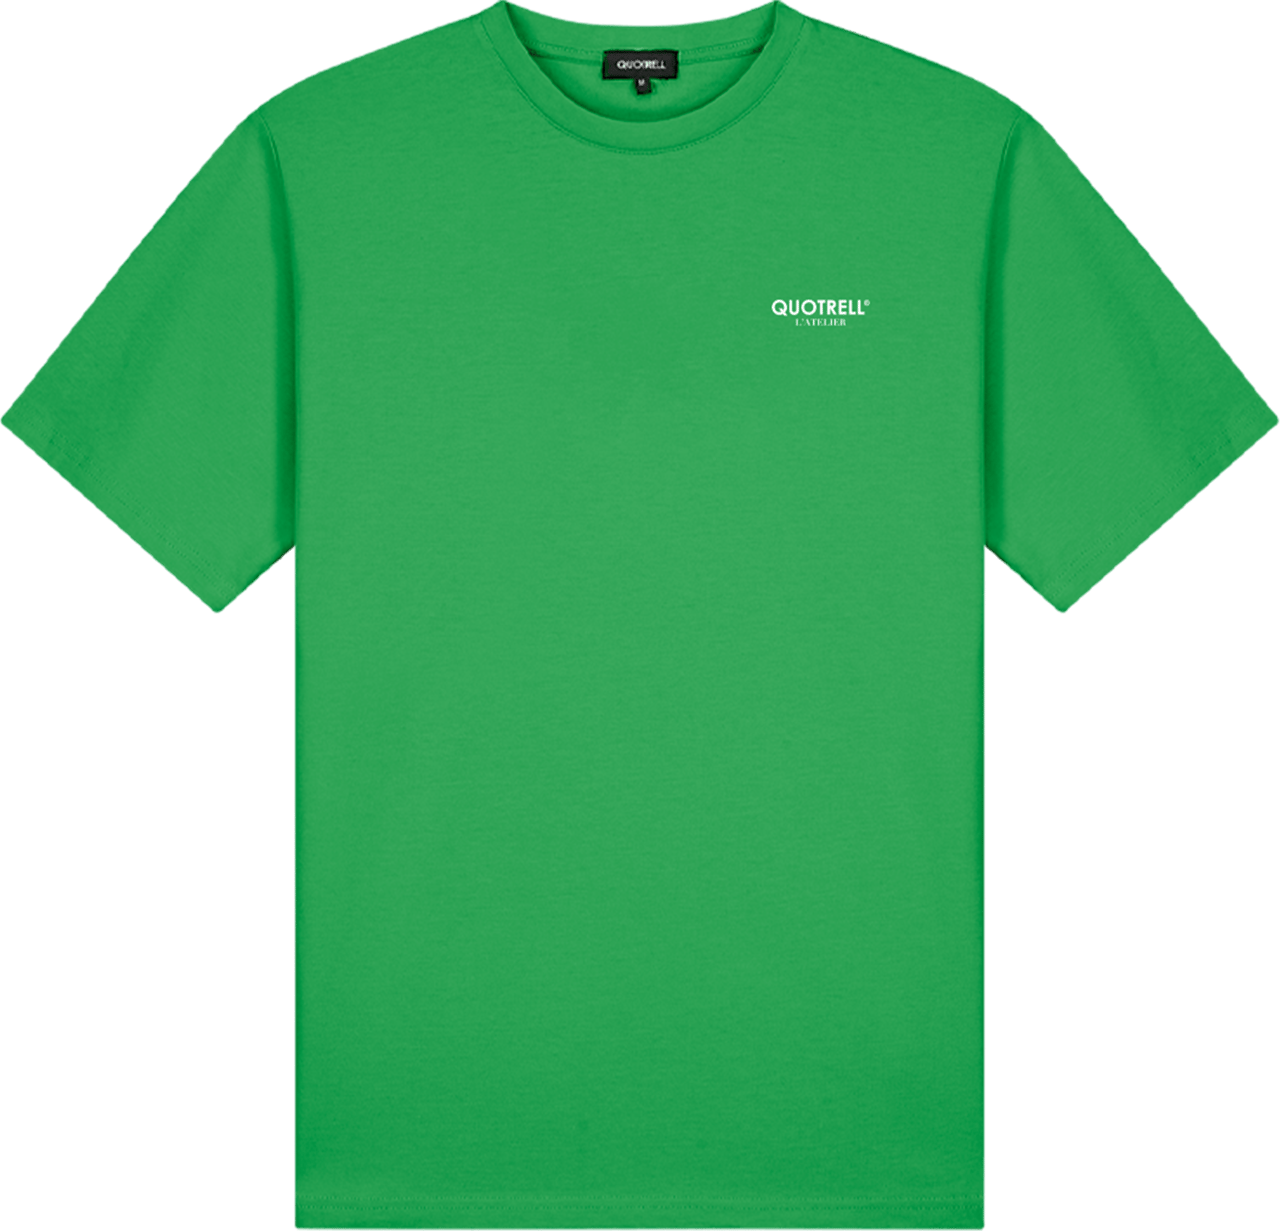 Quotrell L'atelier T-shirt | Green/white Groen